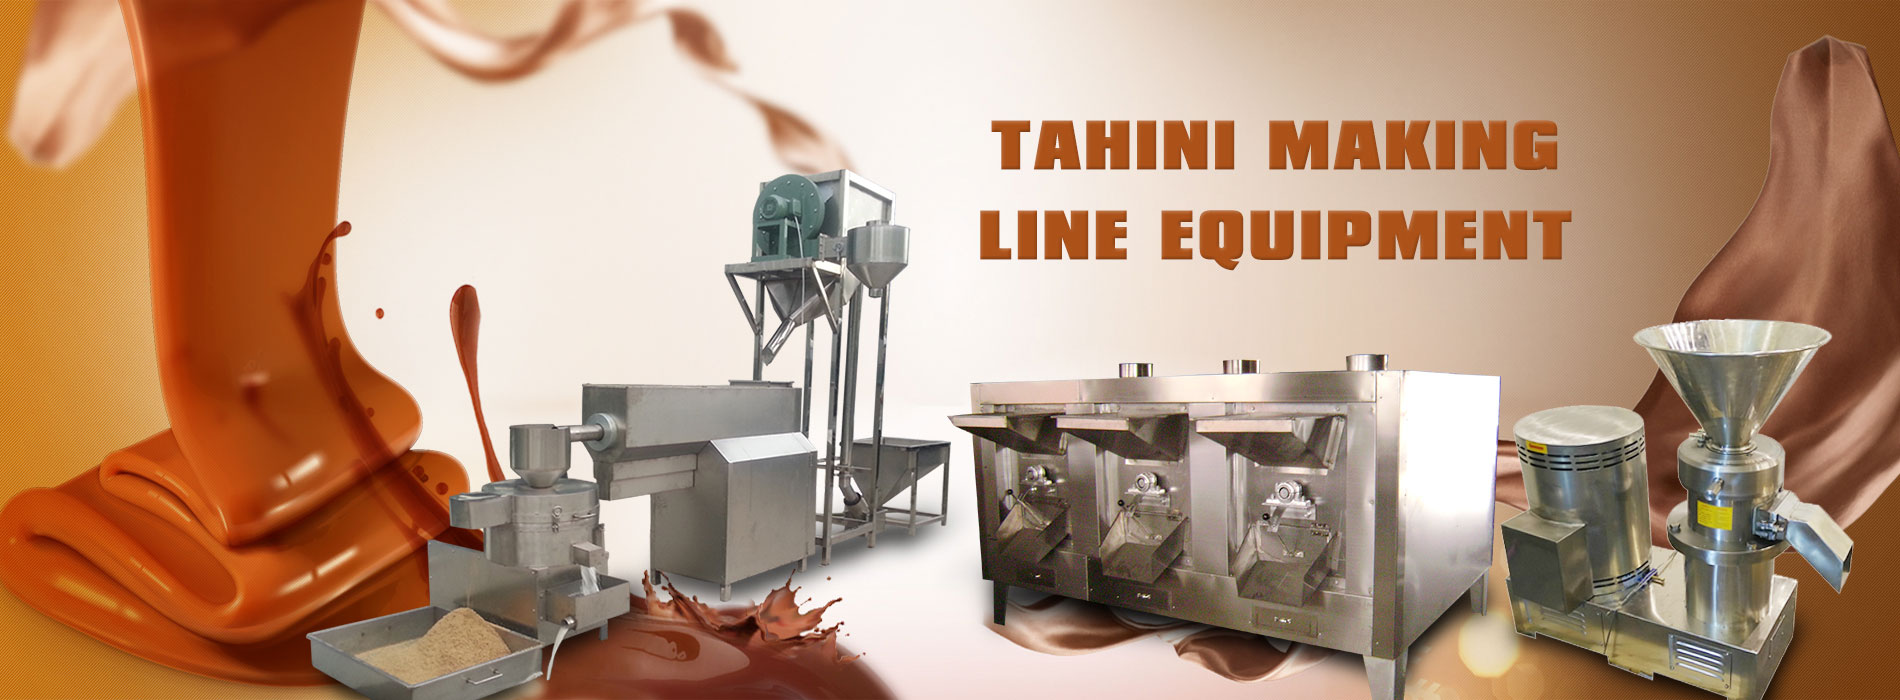 Tahini Making Line Equipment